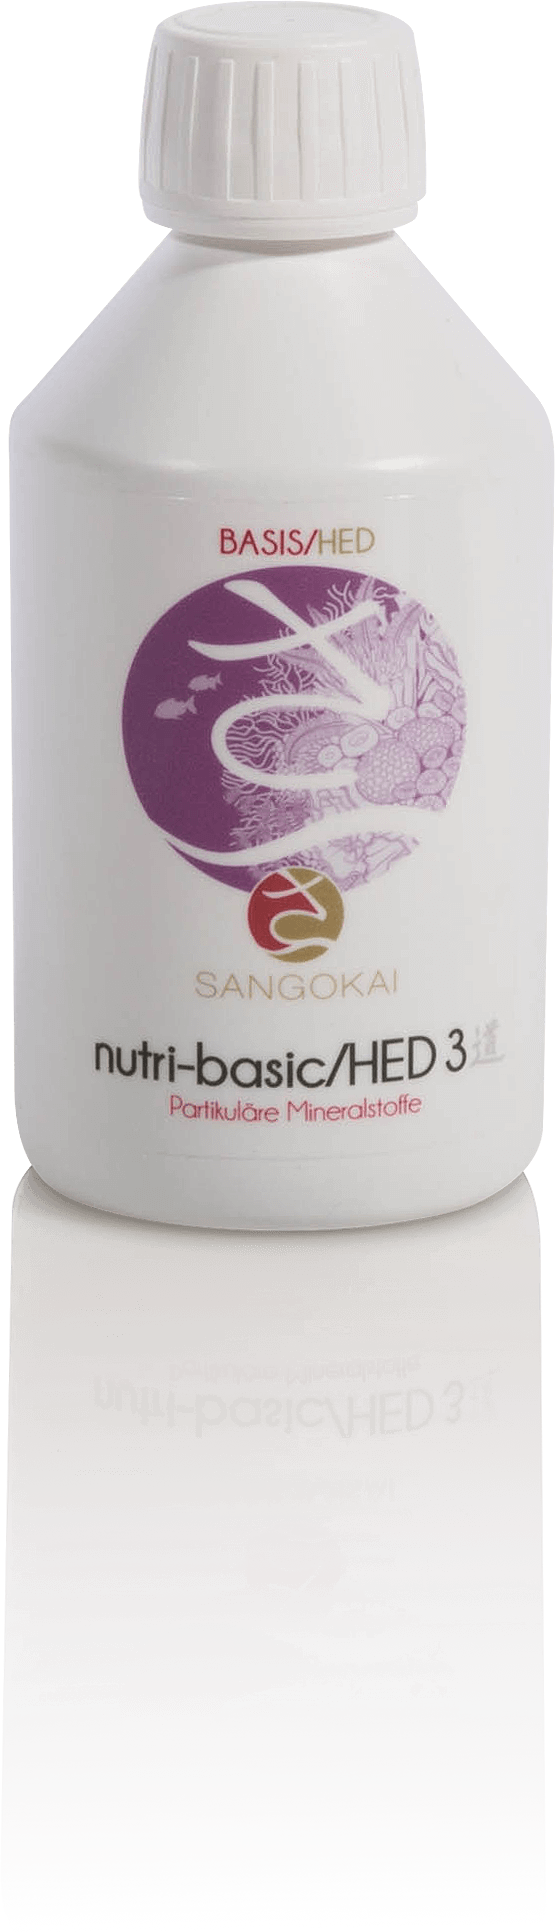 Sango nutri-basic/ HED  # 3  1000 ml Sangokai